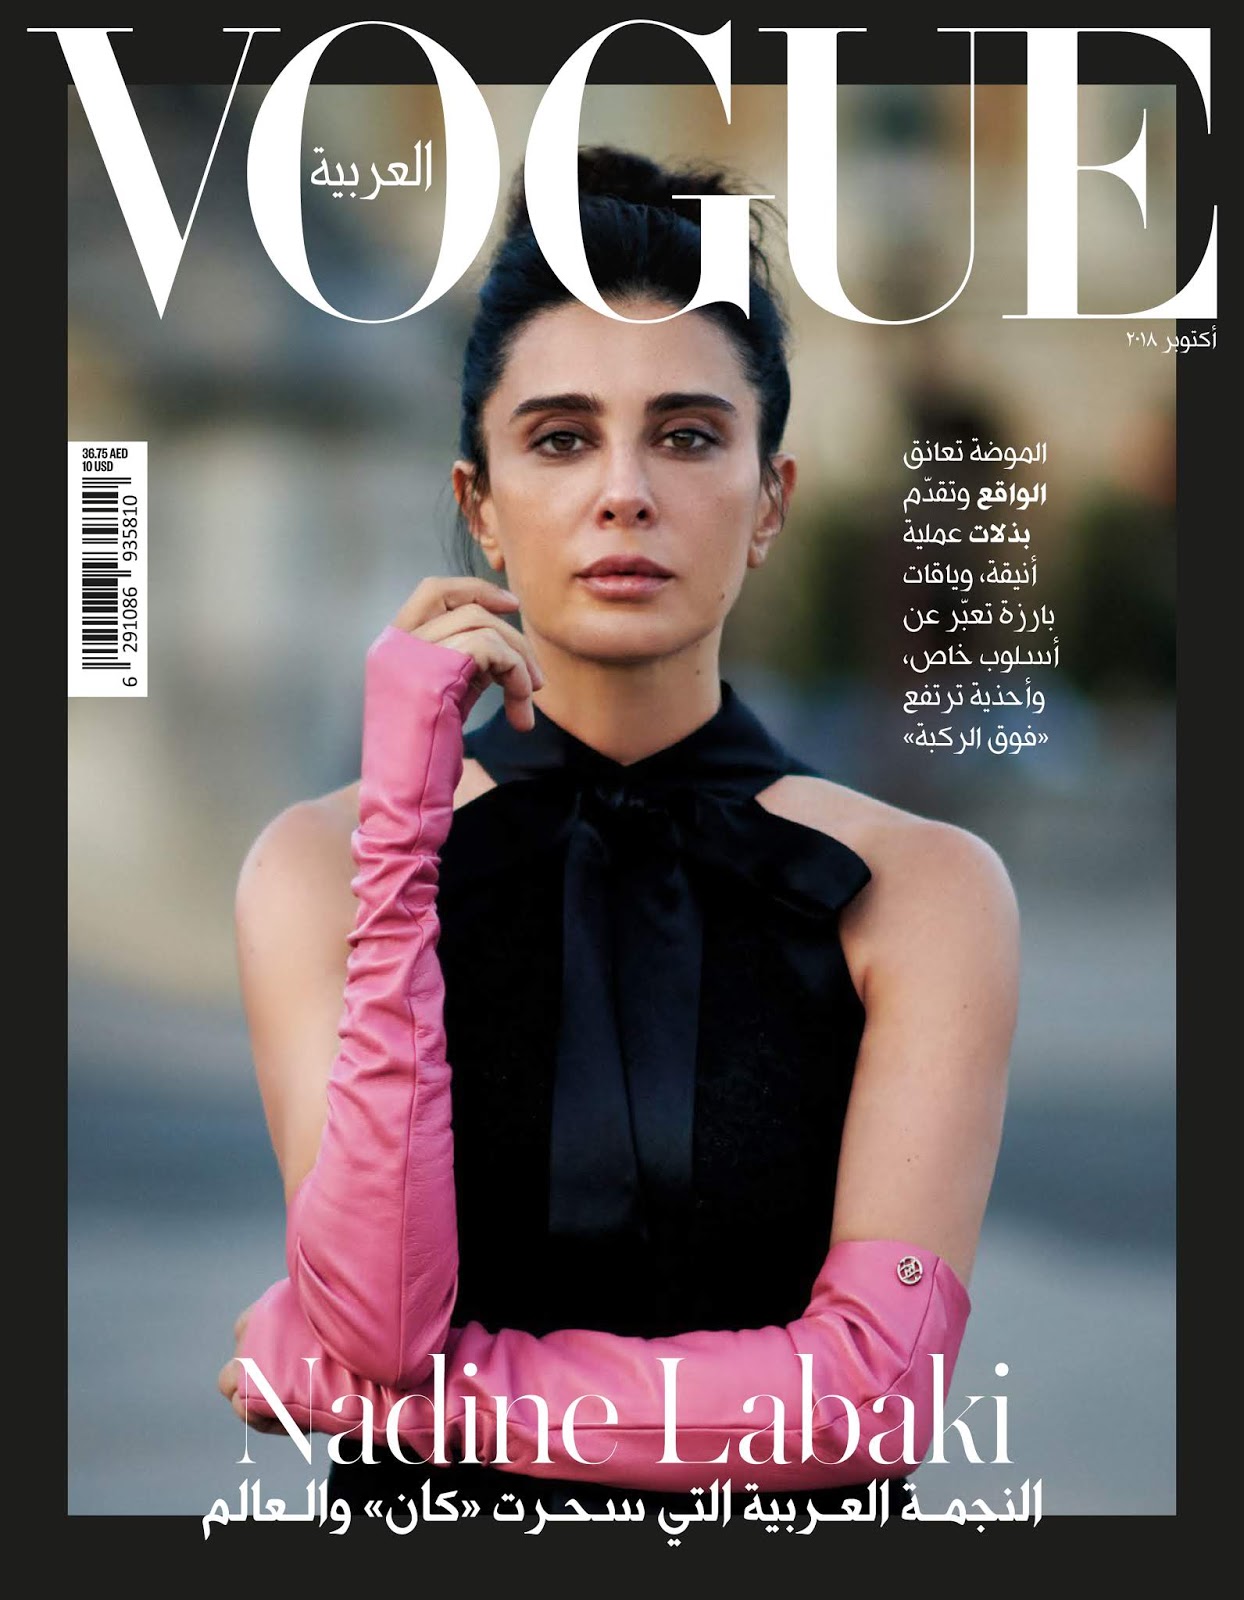 Nadine Labaki by Drew Jarrett for Vogue Arabia Oct 2018 (3).jpg